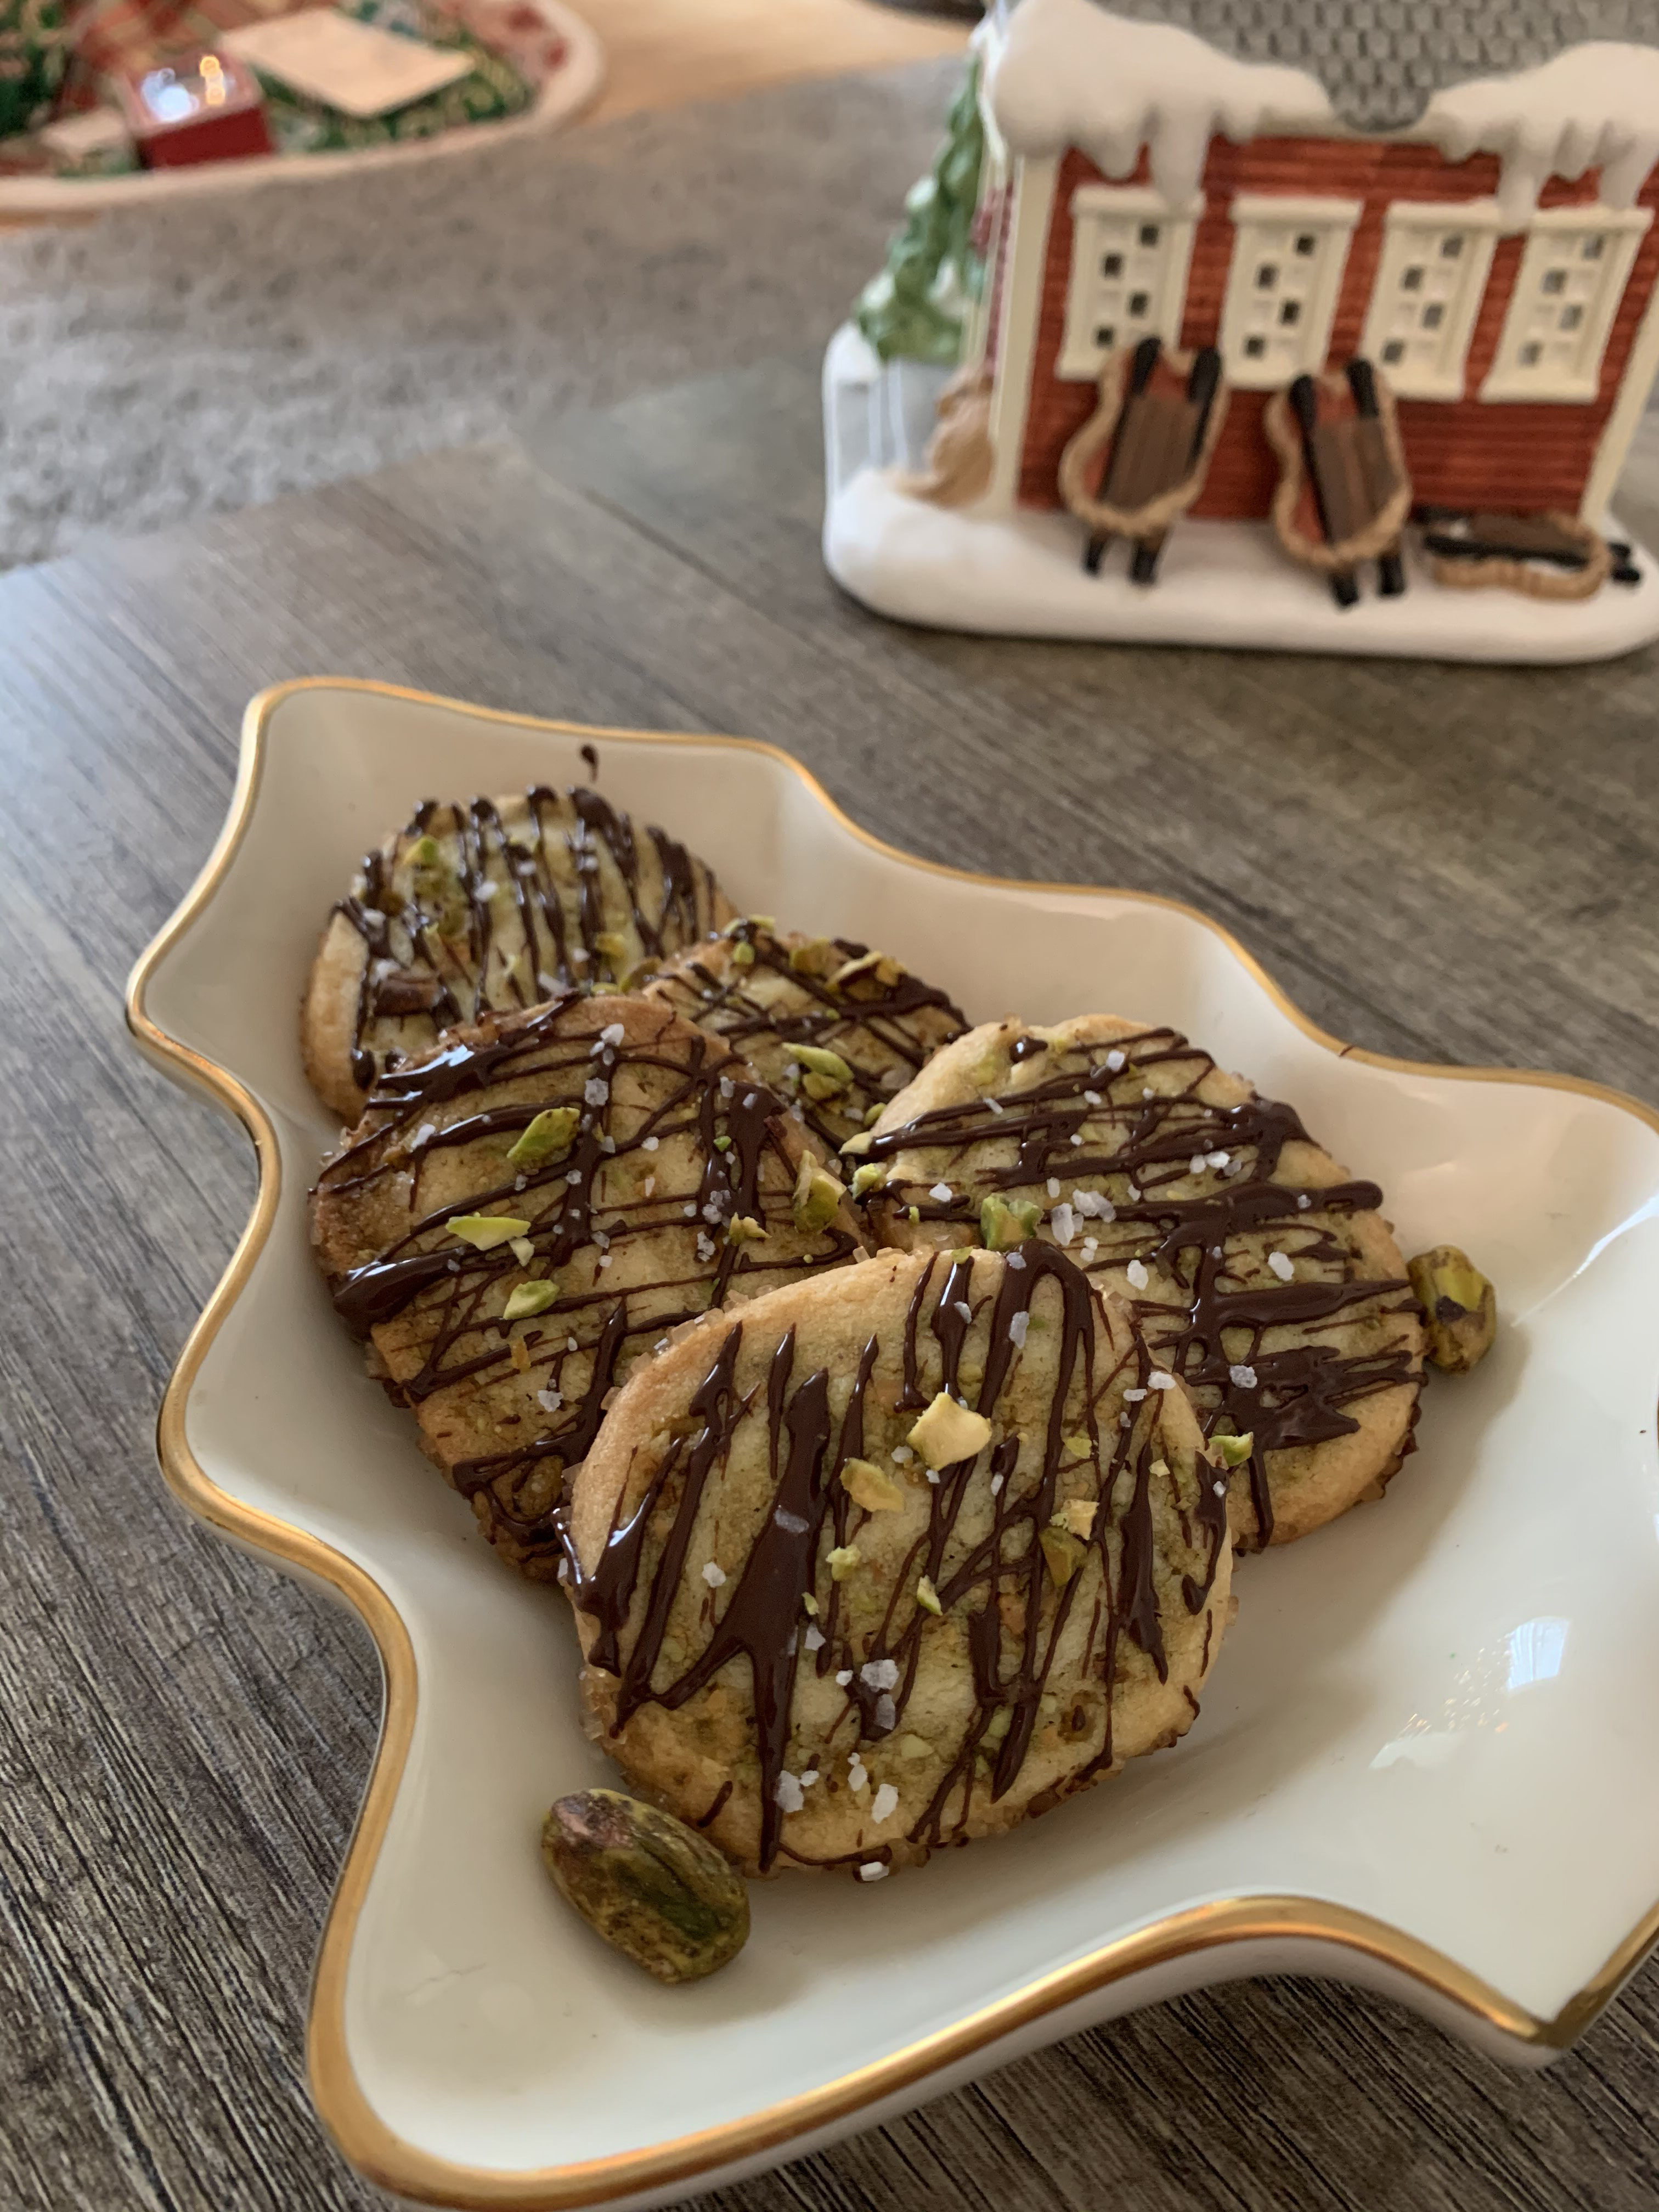 Chocolate-drizzled pistachio cookies